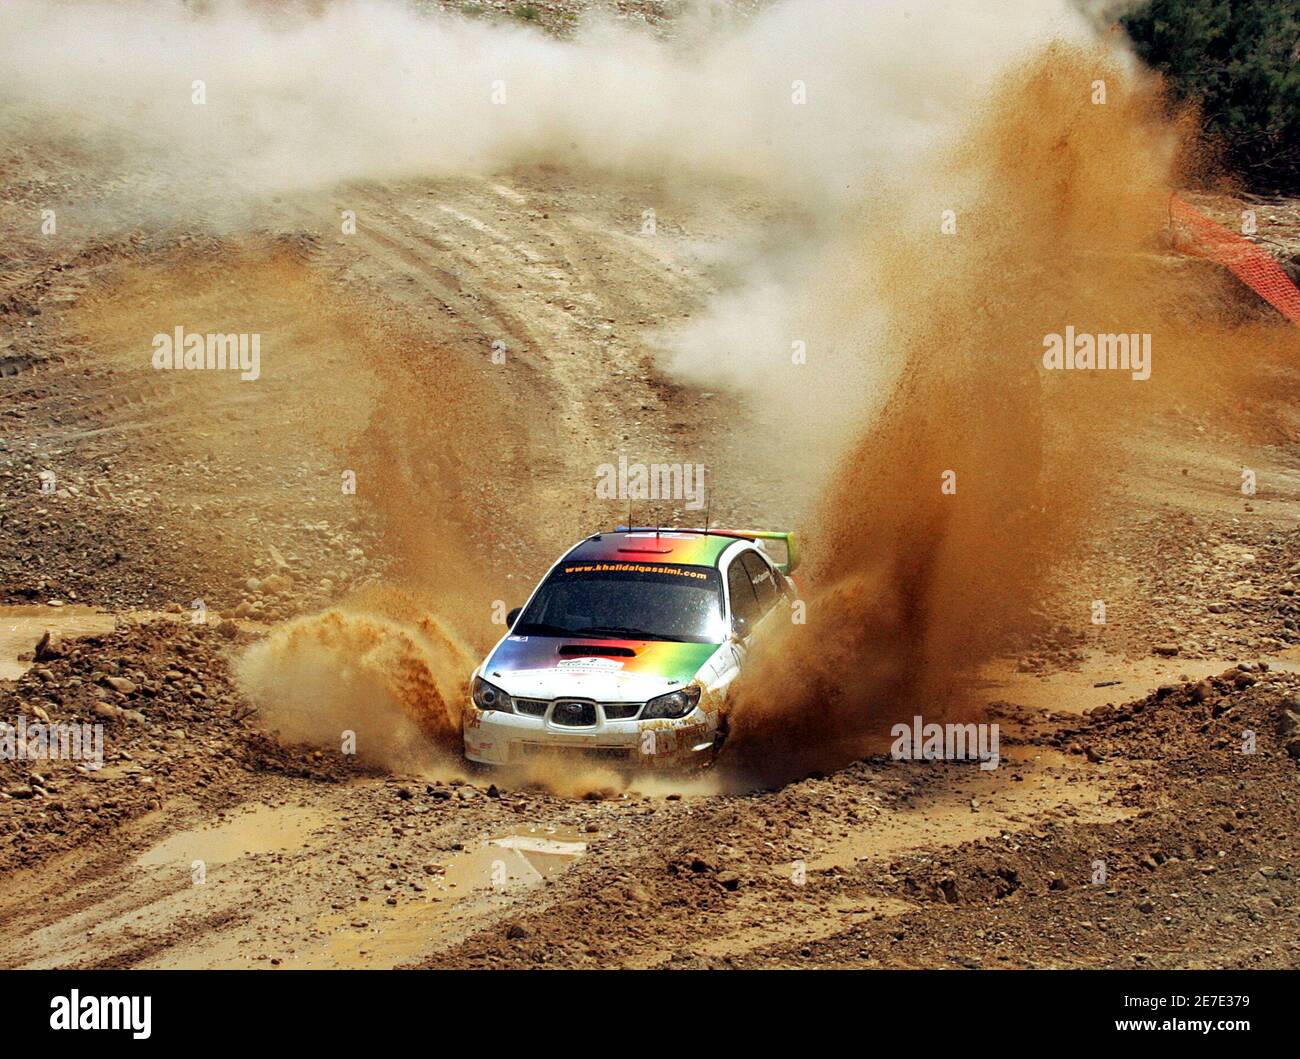 Page 2 - Subaru Impreza Sti Rally Car High Resolution Stock Photography and  Images - Alamy